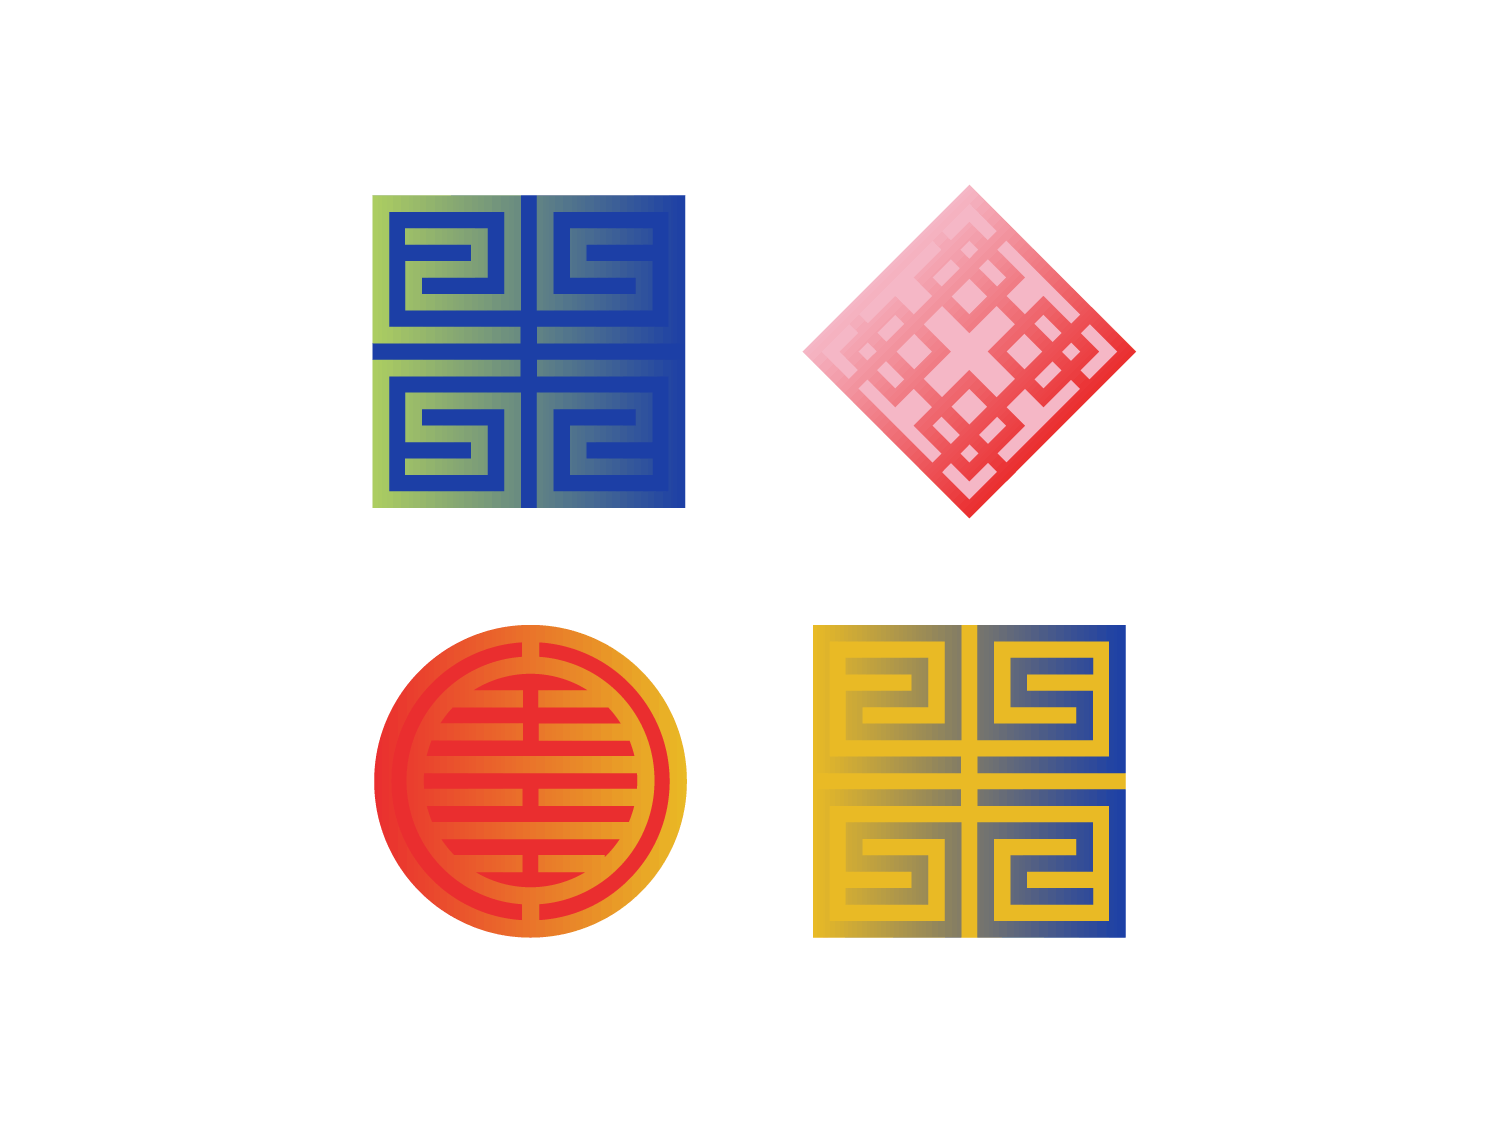 Full color emblems for South Korea